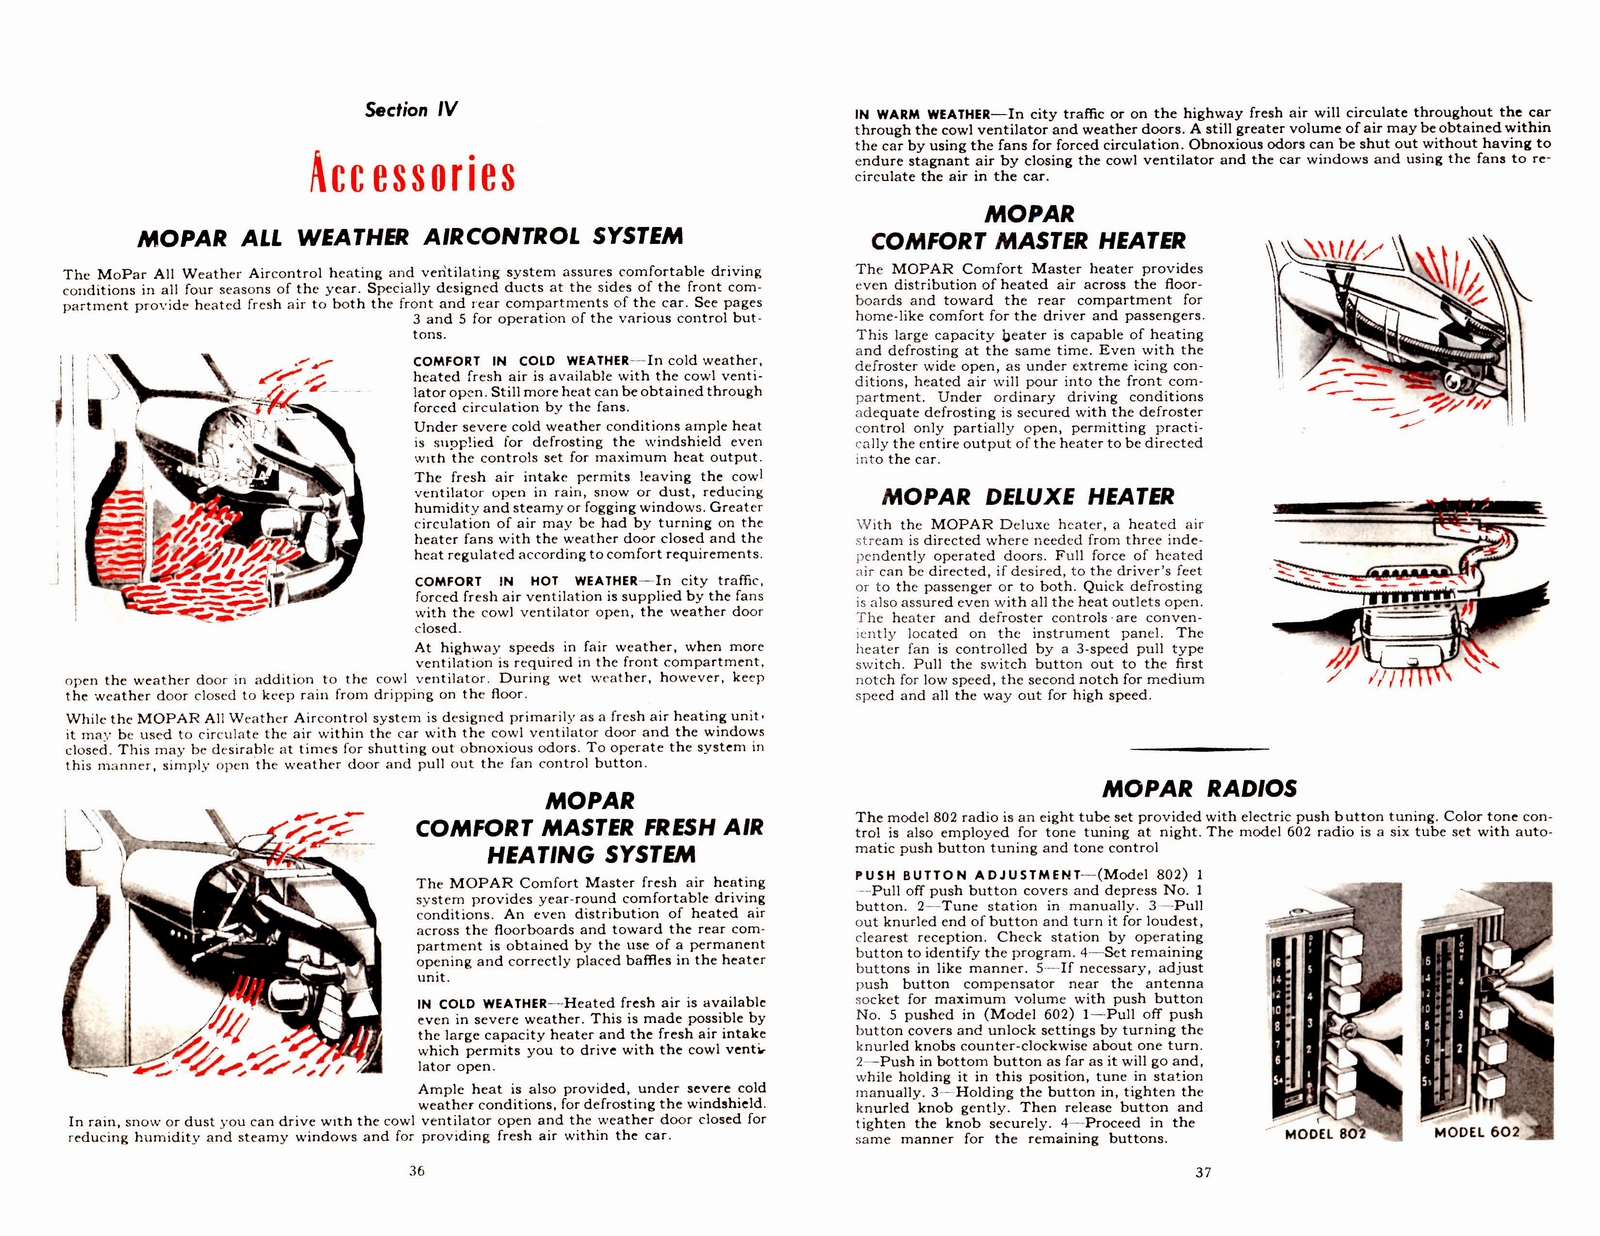 n_1947 Dodge Manual-36-37.jpg